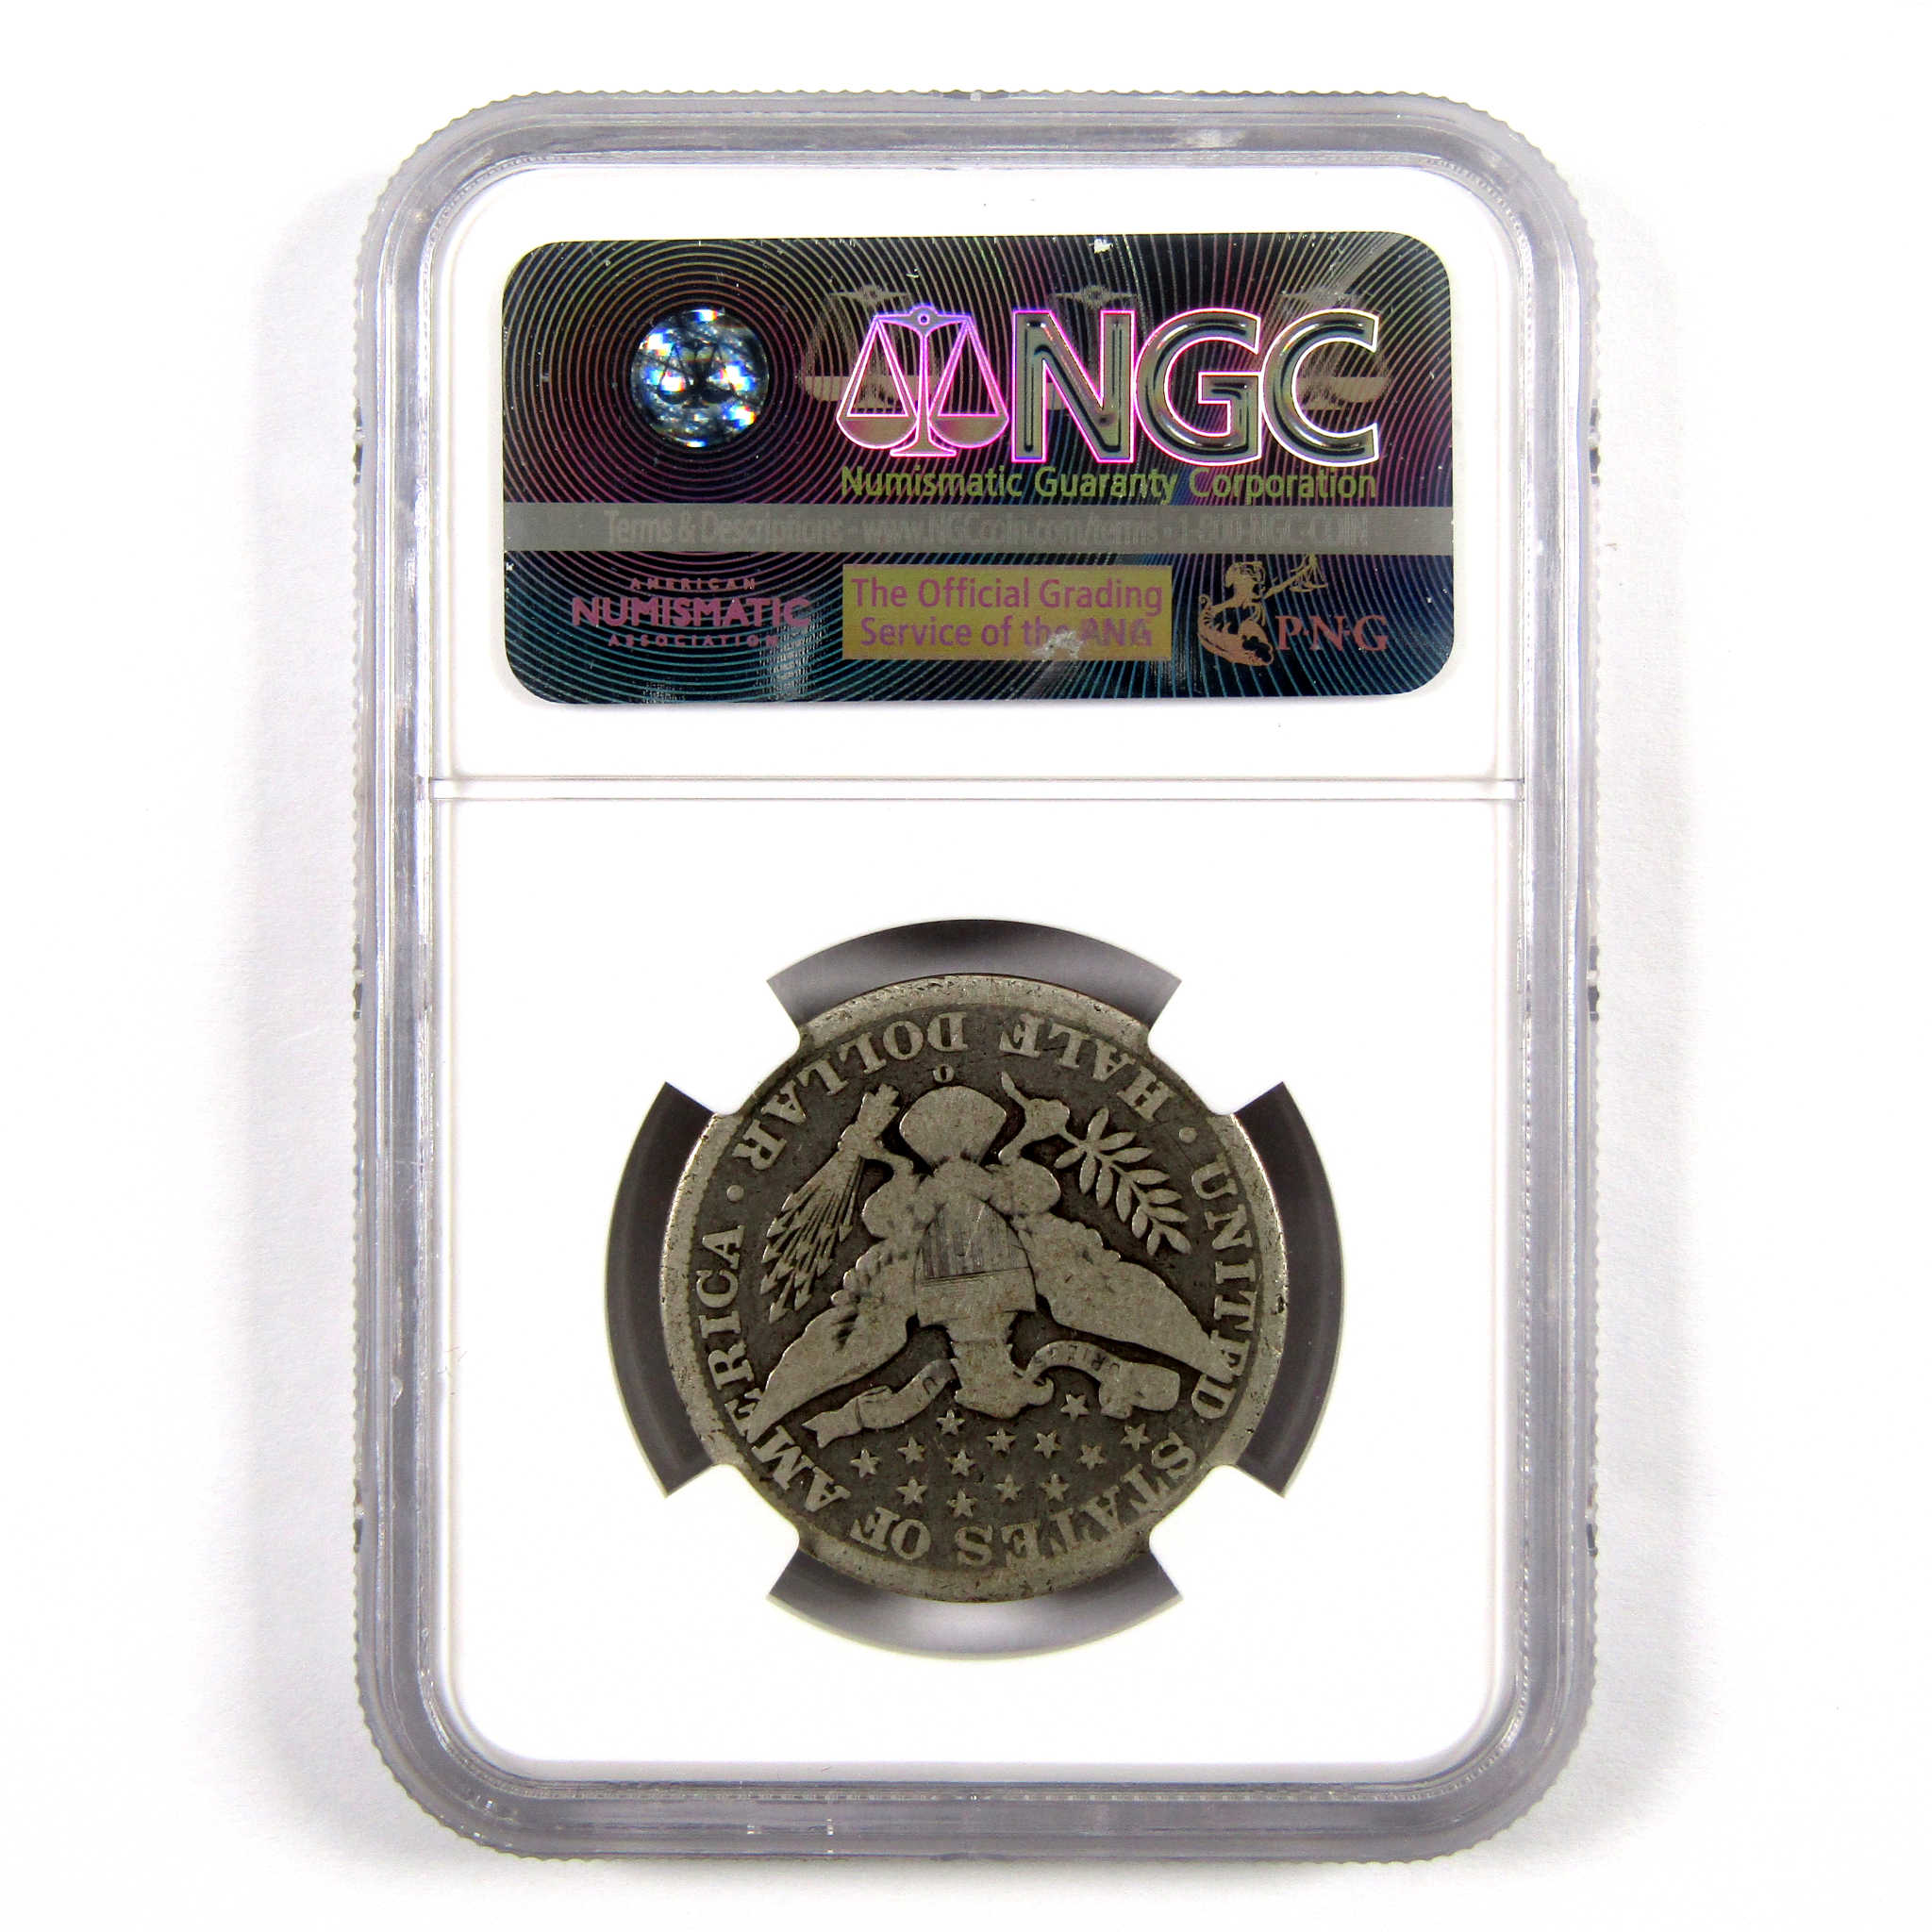 1897 O Barber Half Dollar G 4 NGC 90% Silver 50c Coin SKU:I11136